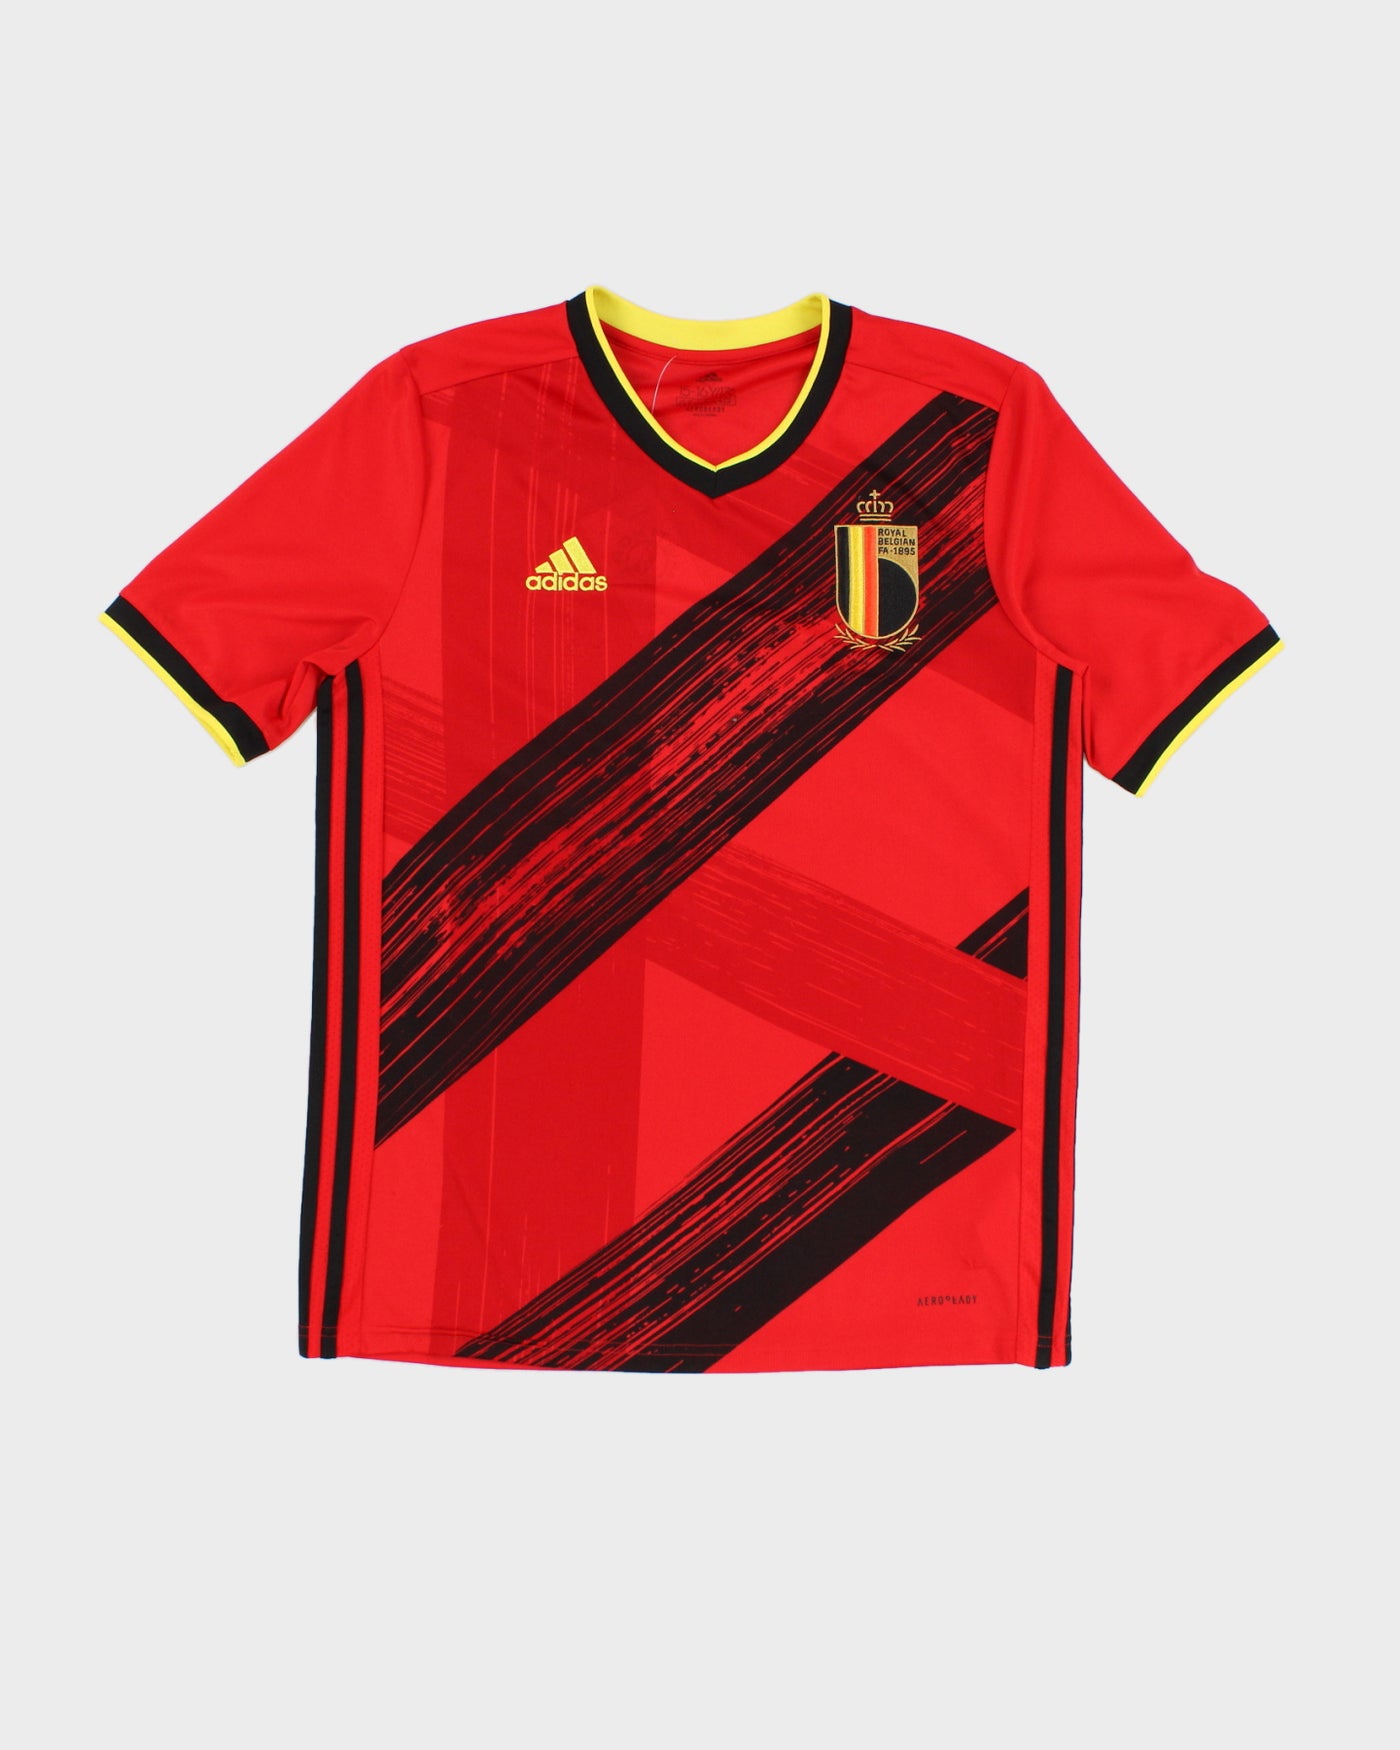 Adidas Belgium Football Shirt - Youth XL